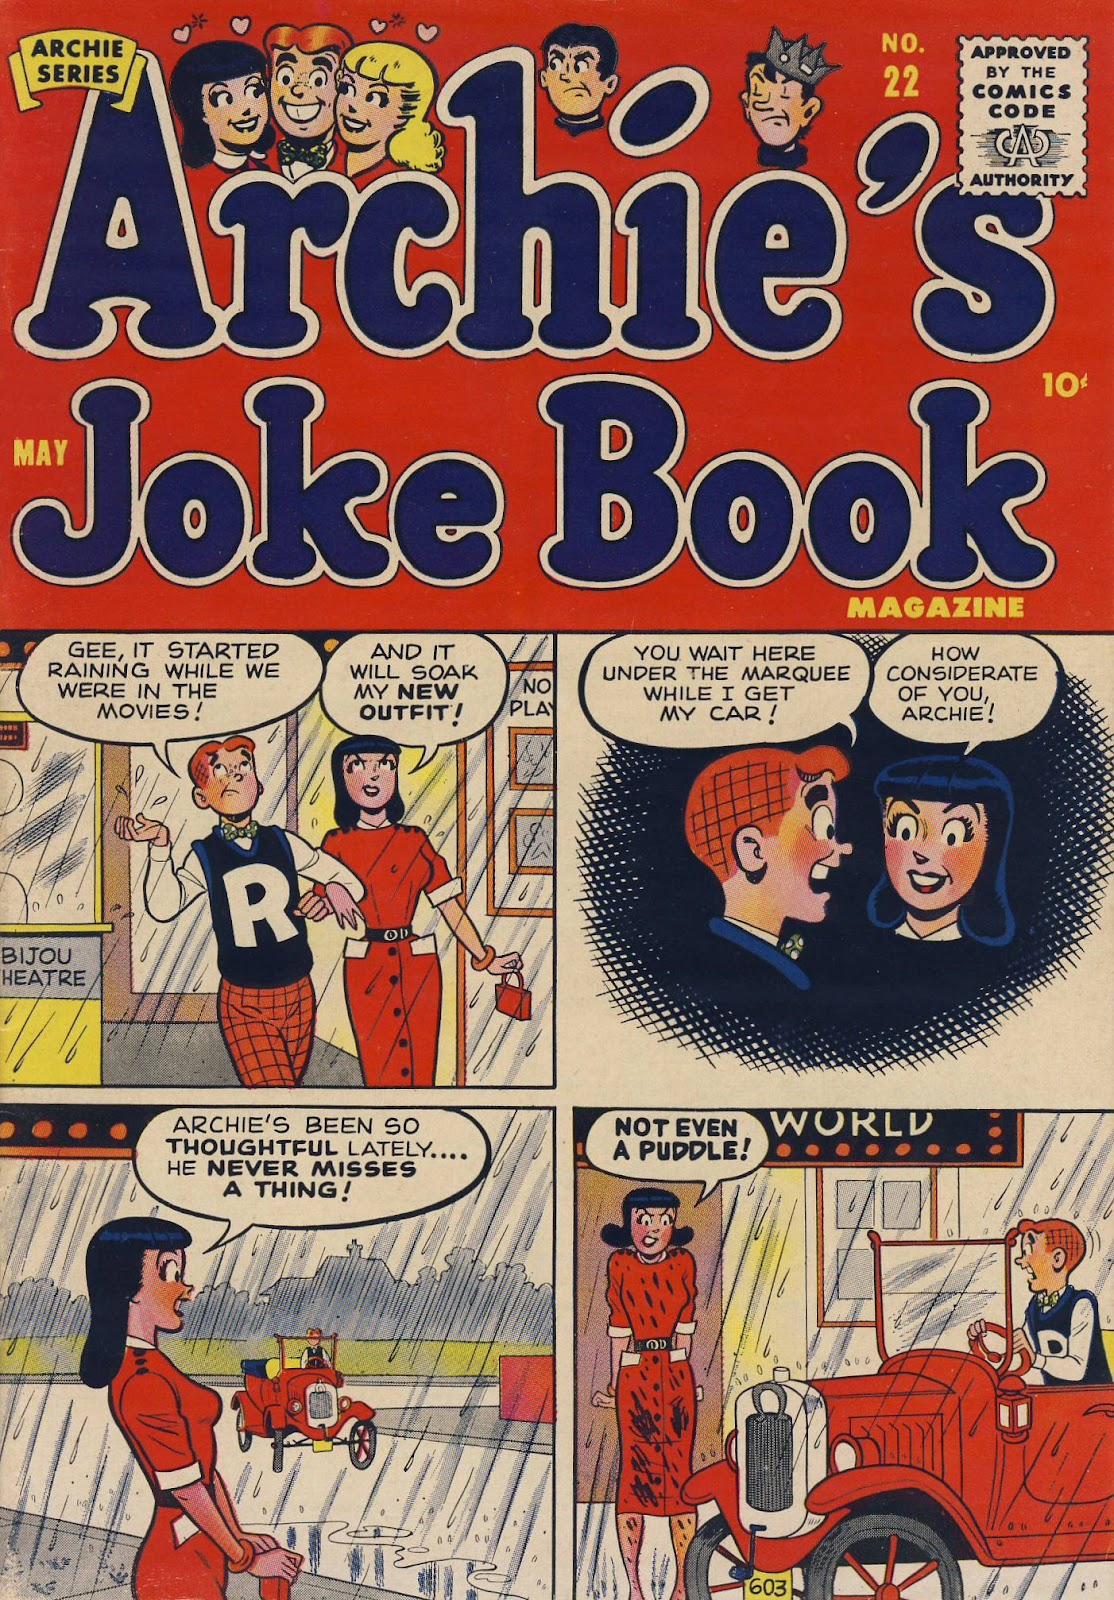 Archie's Joke Book Magazine issue 22 - Page 1